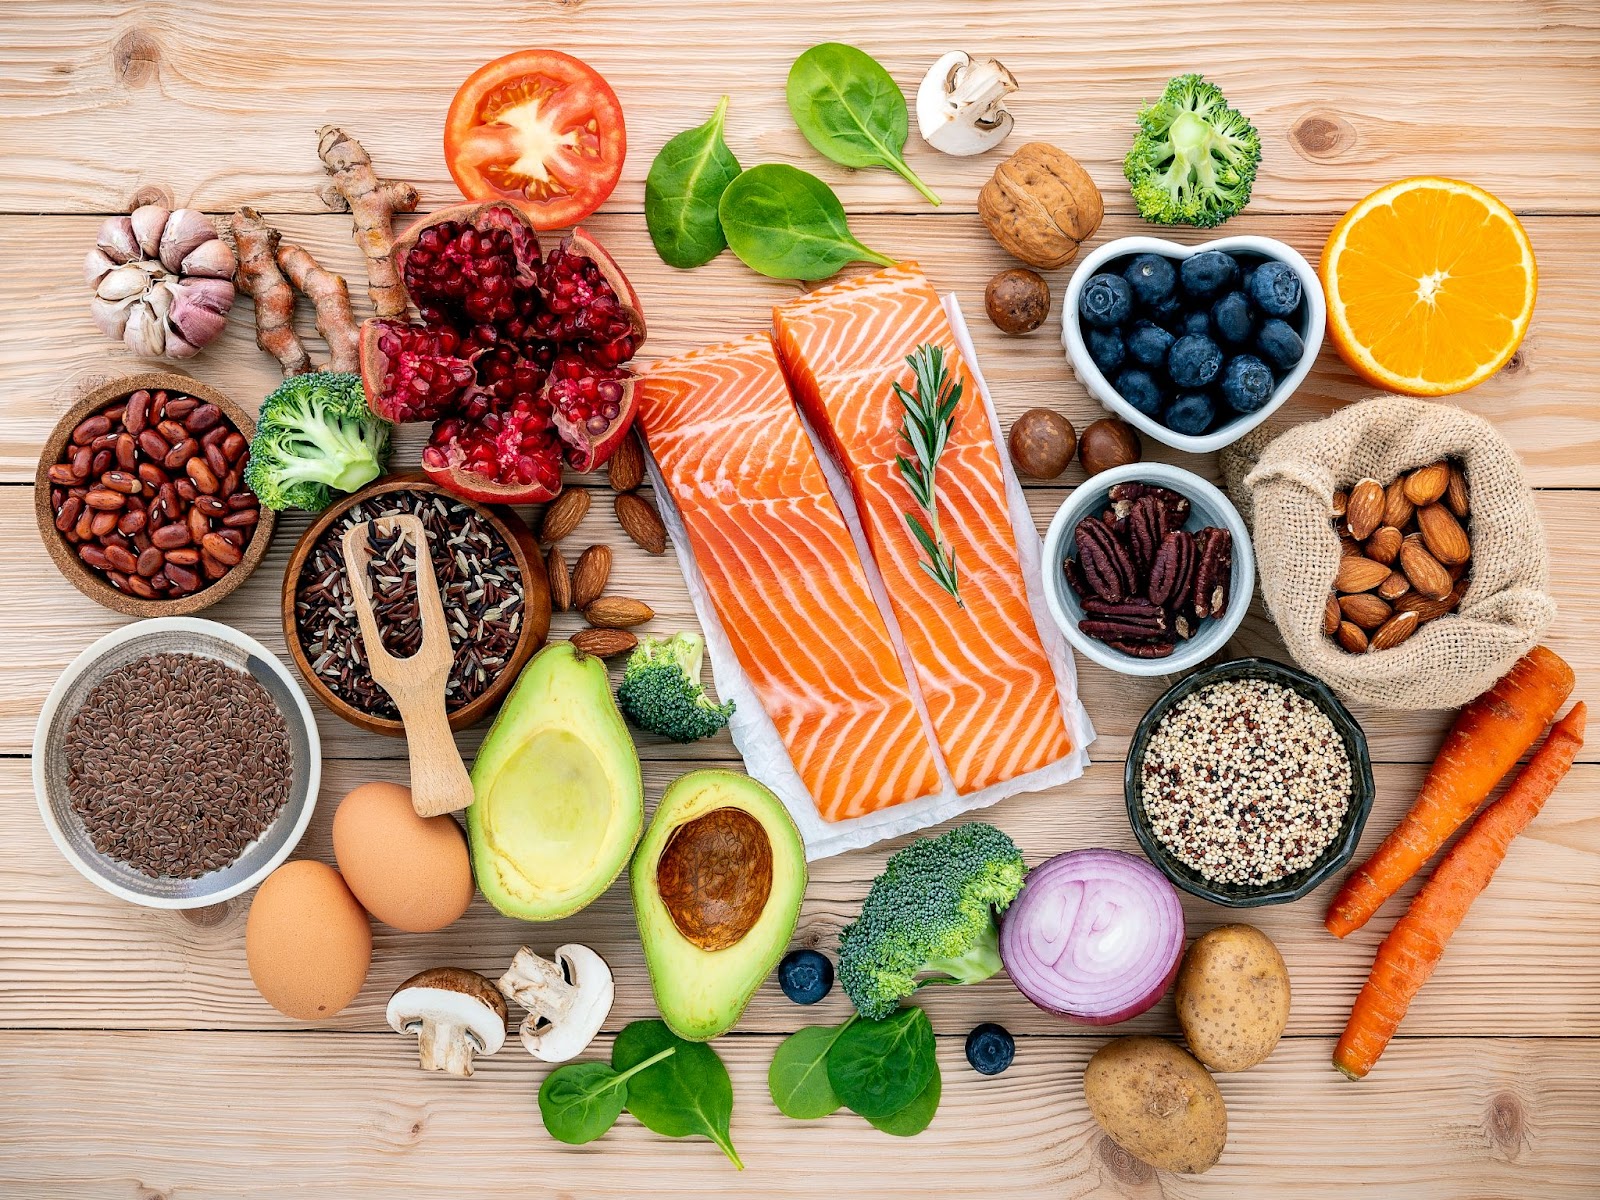 a variety of healthy food salmon, avacado, carrots,eggs,garlic,nuts,blueberry,mushrooms,turmeric, brocoli and orange